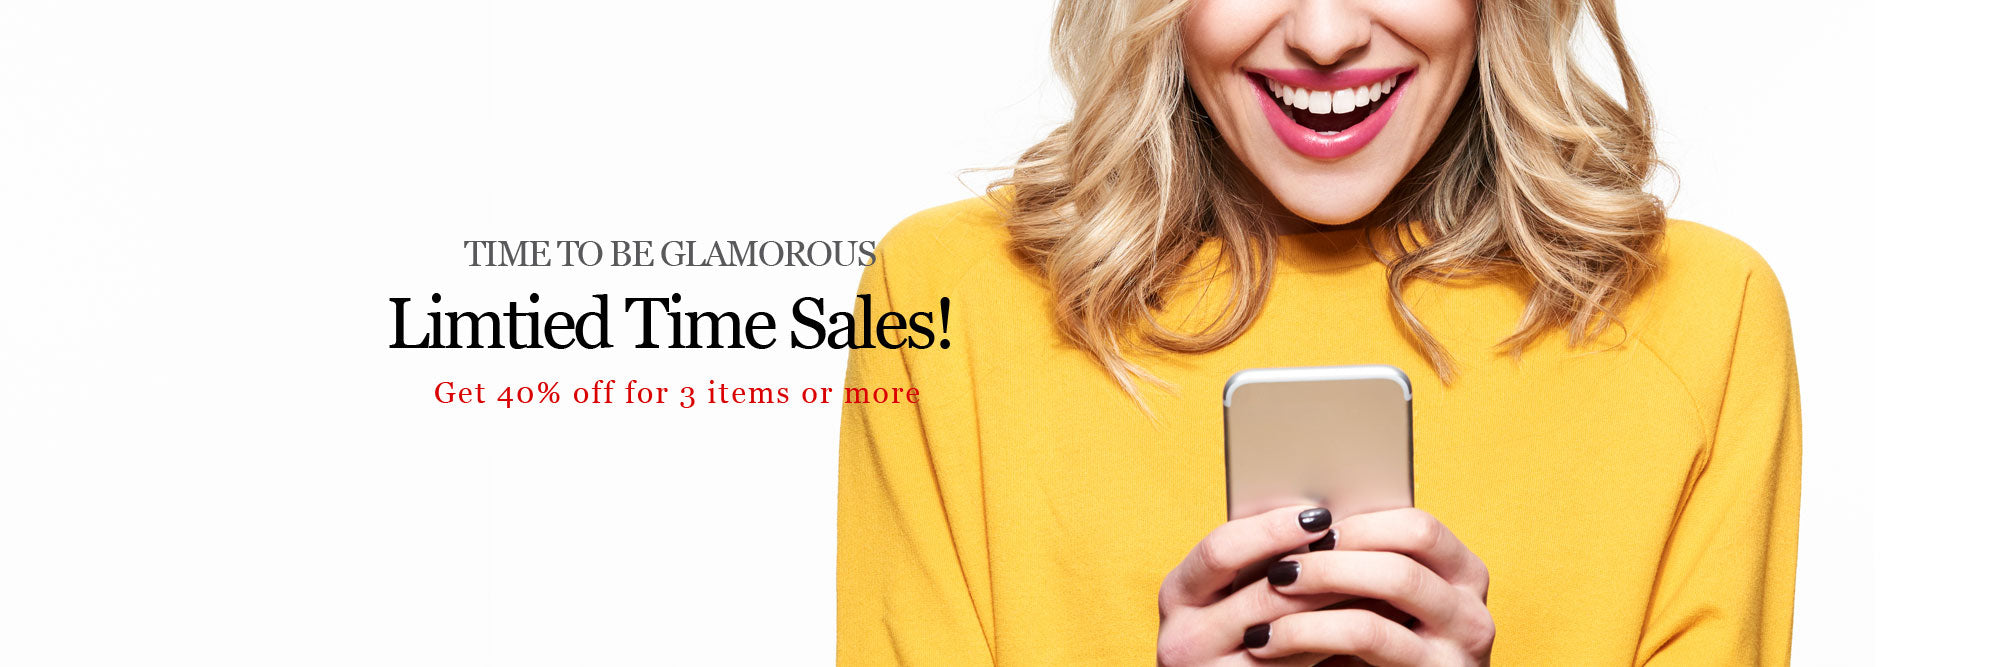 Glamorousky Limited Time Sales